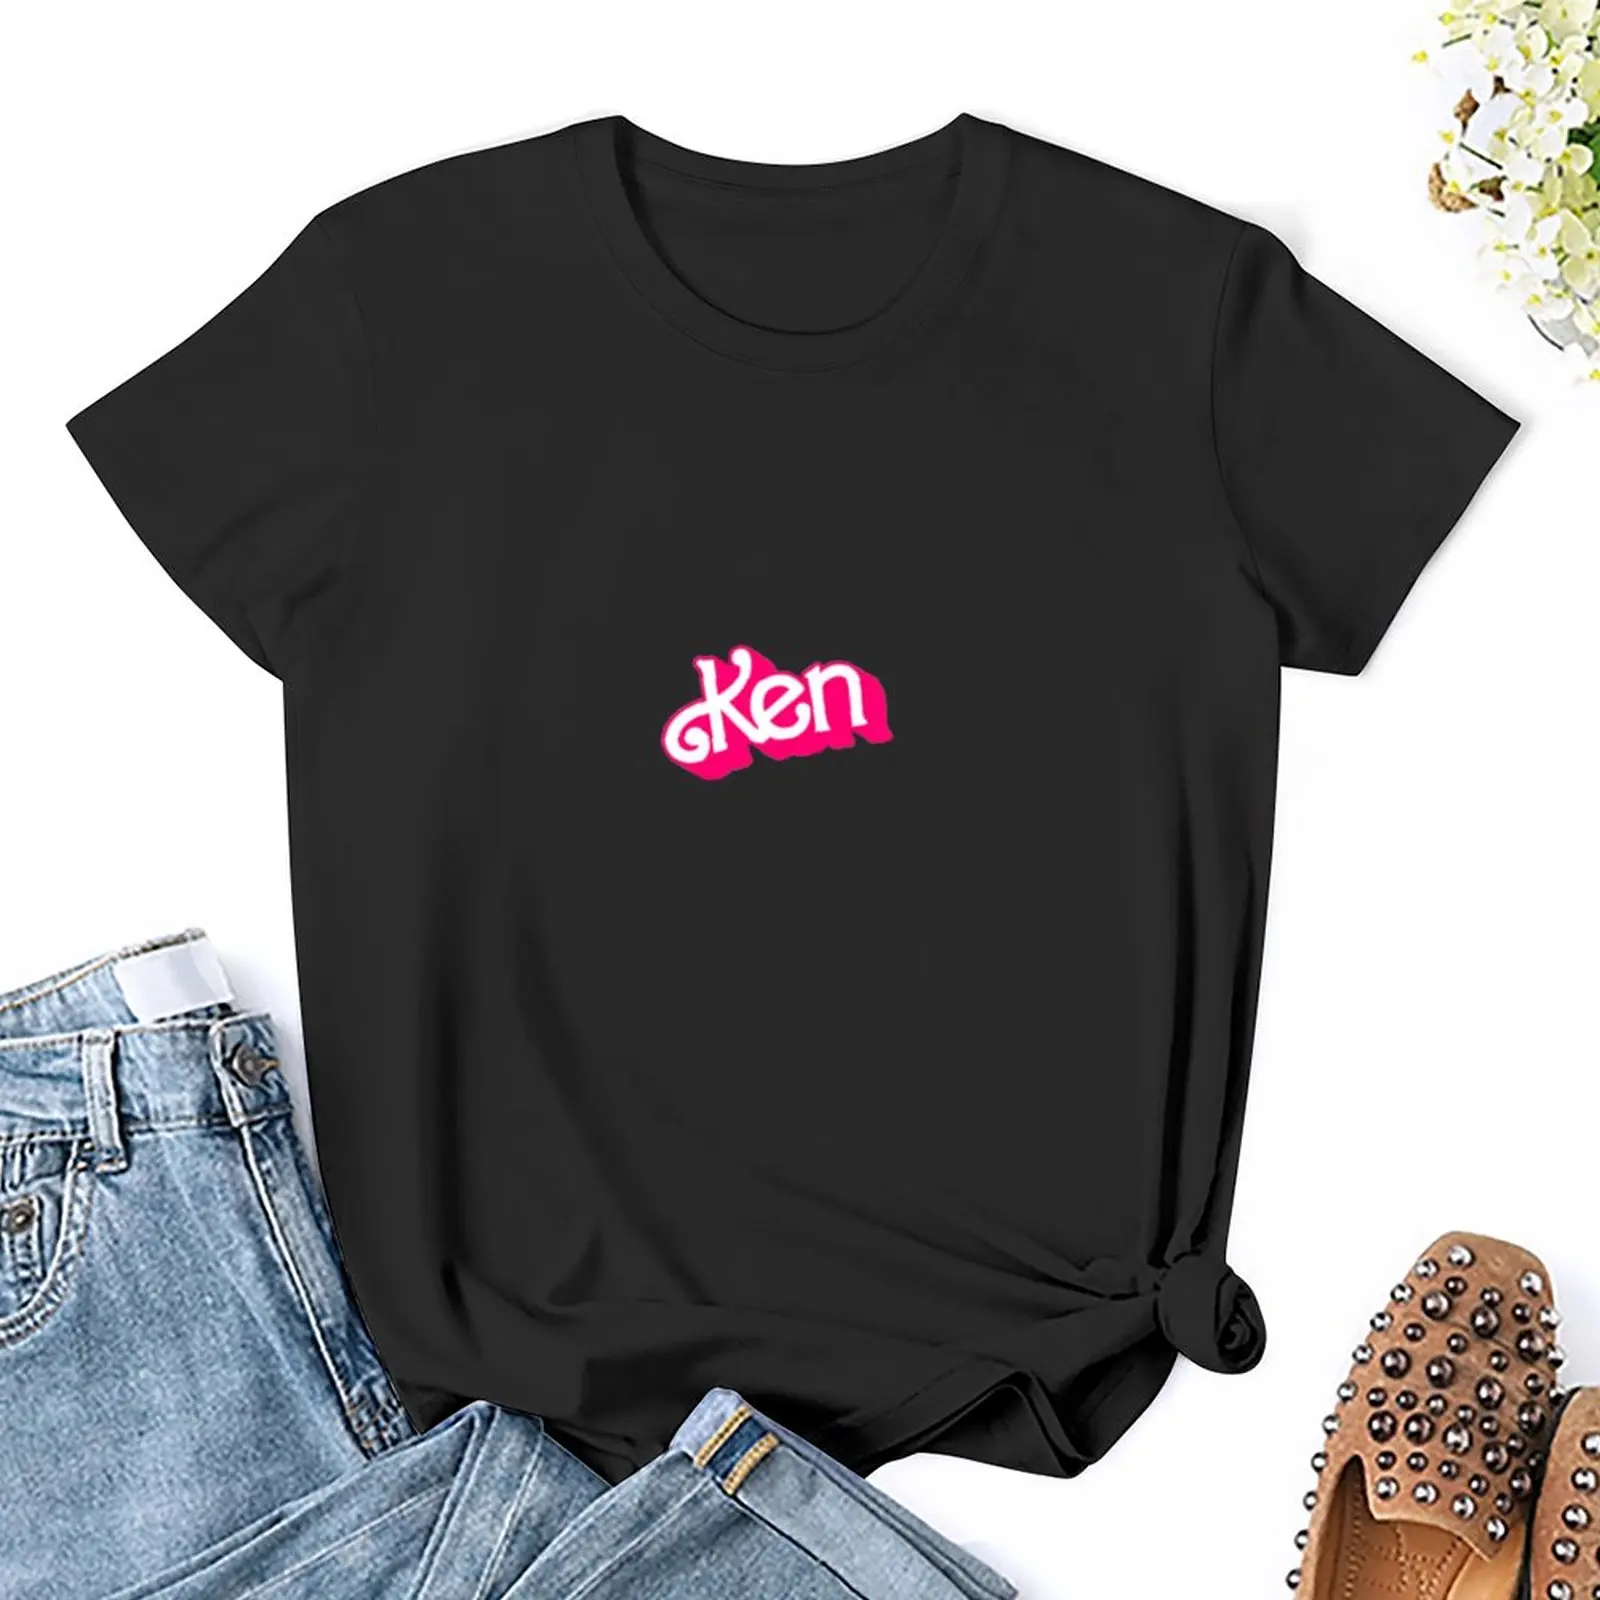 Футболка с логотипом Кена, одежда из аниме, летний топ, женские футболки